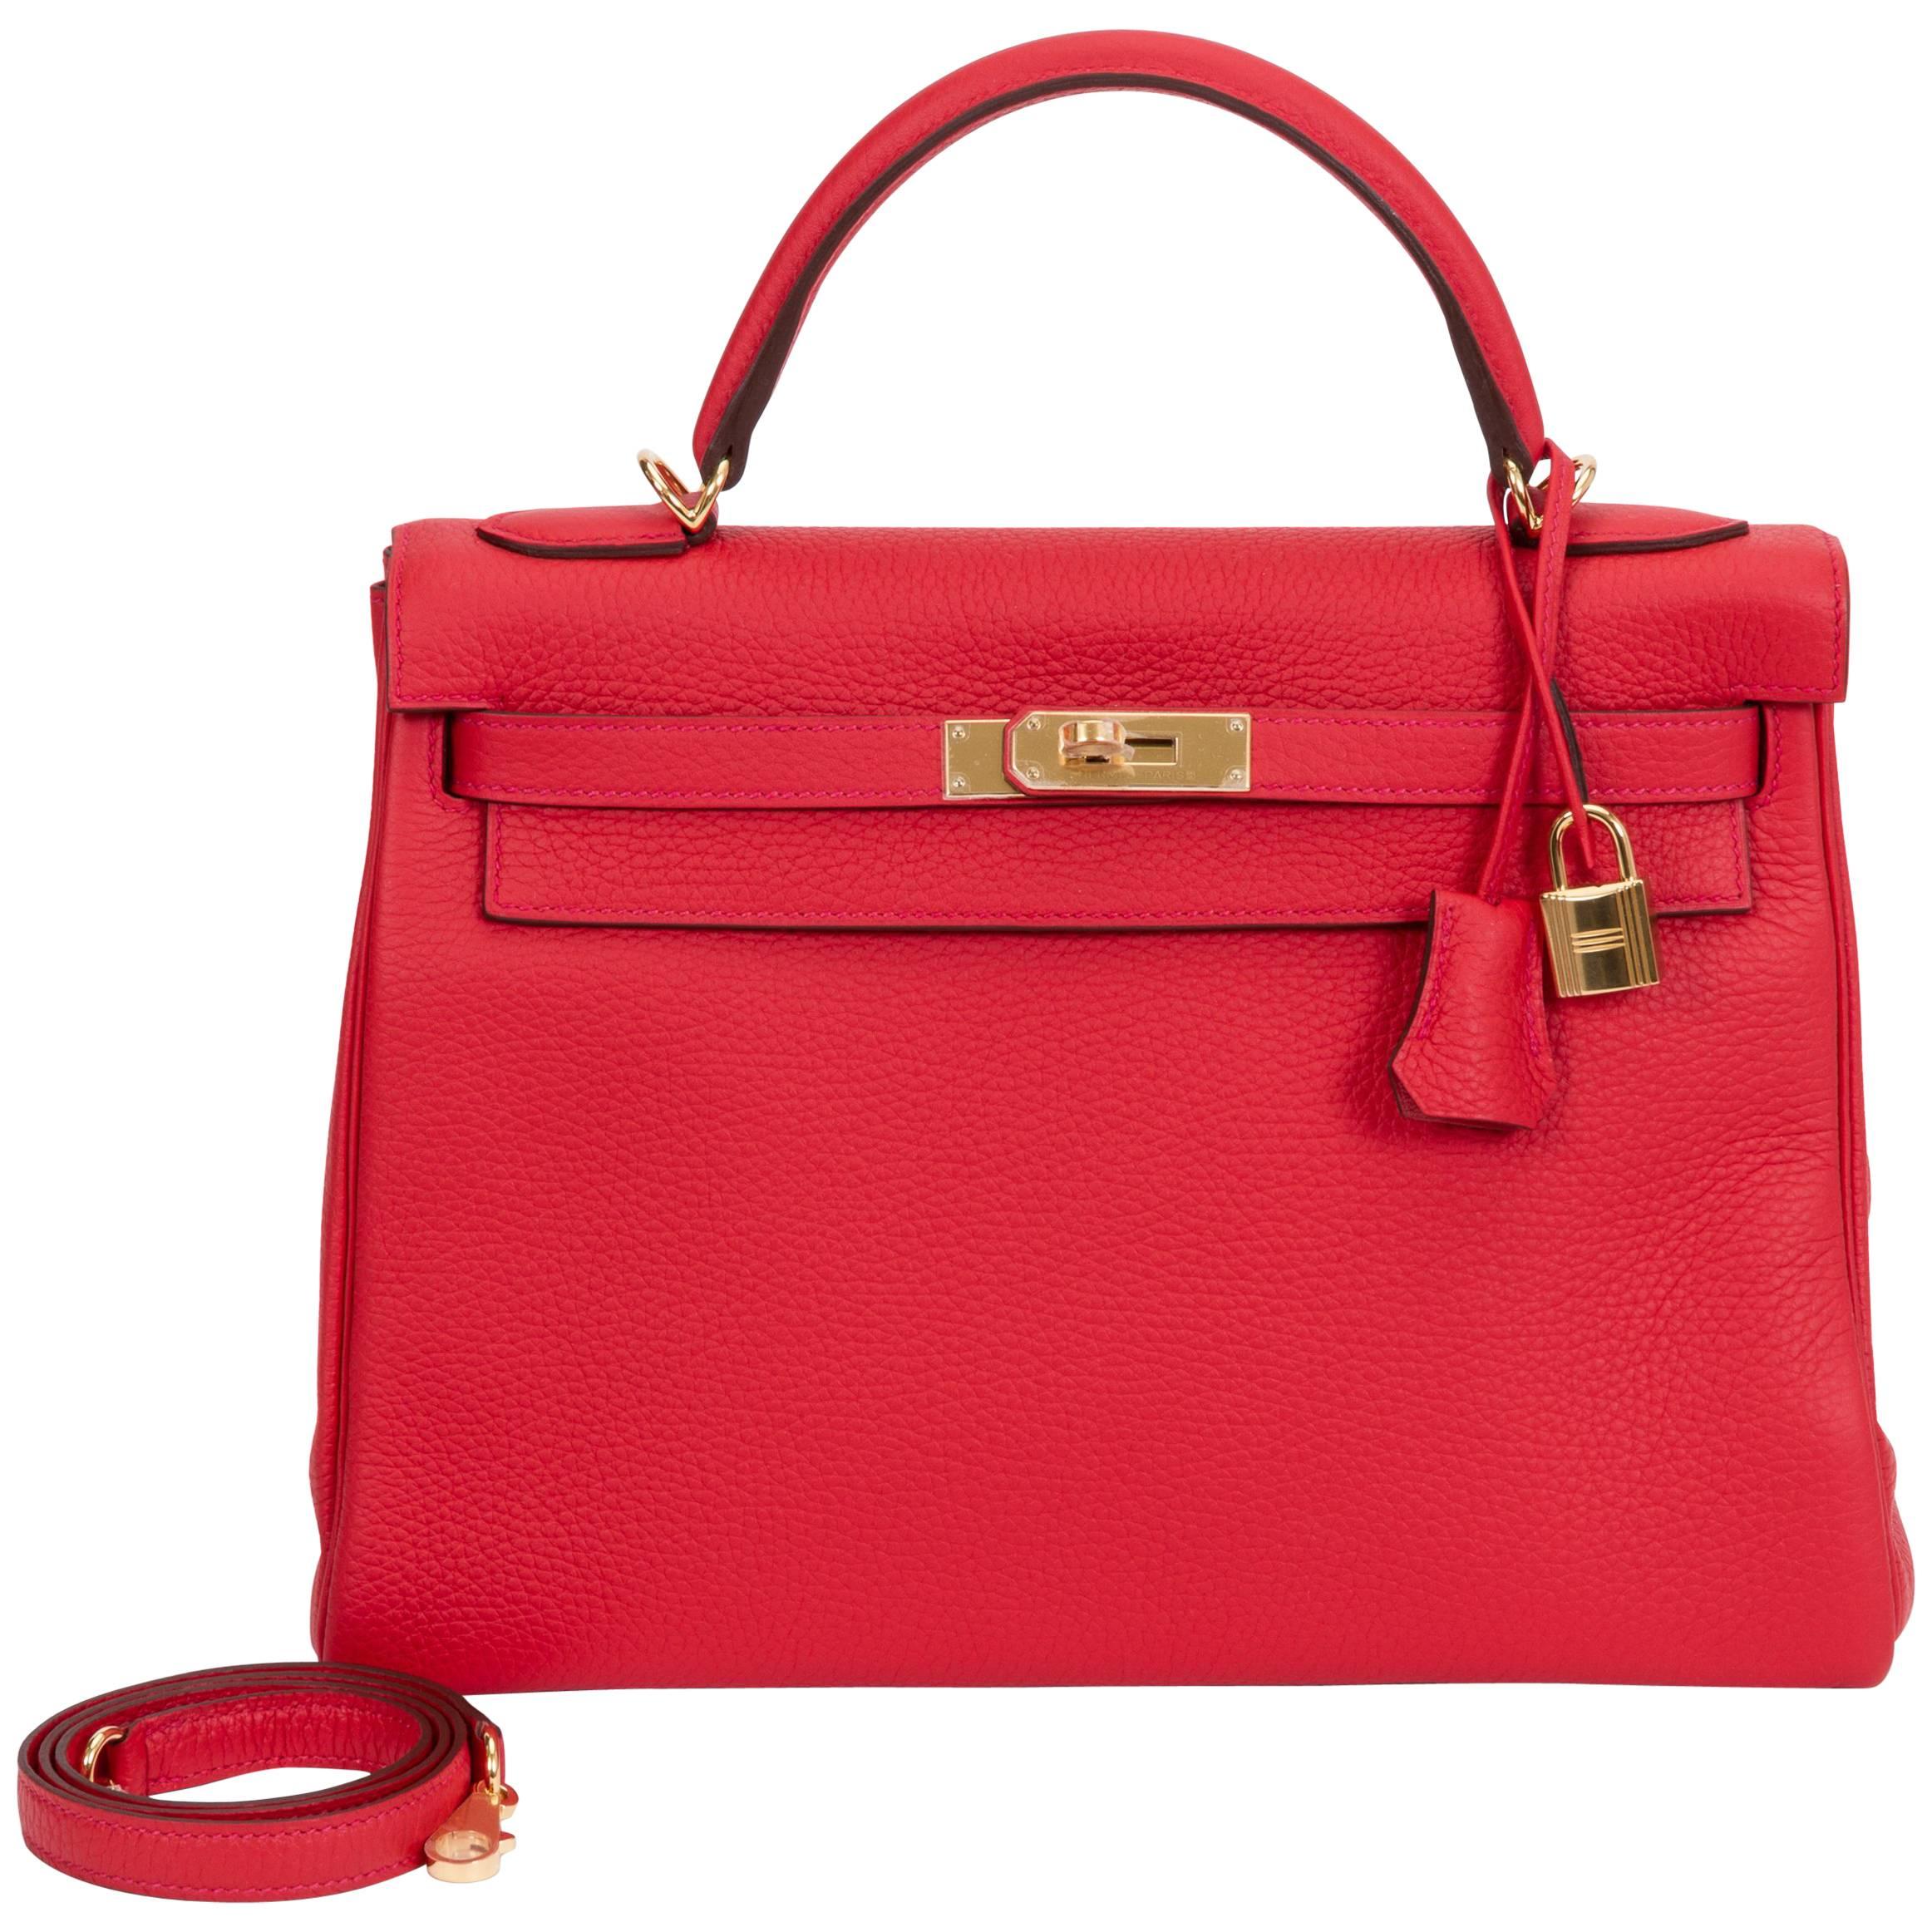 NEW in Box Hermès 32cm Rouge Tomate Kelly Bag 